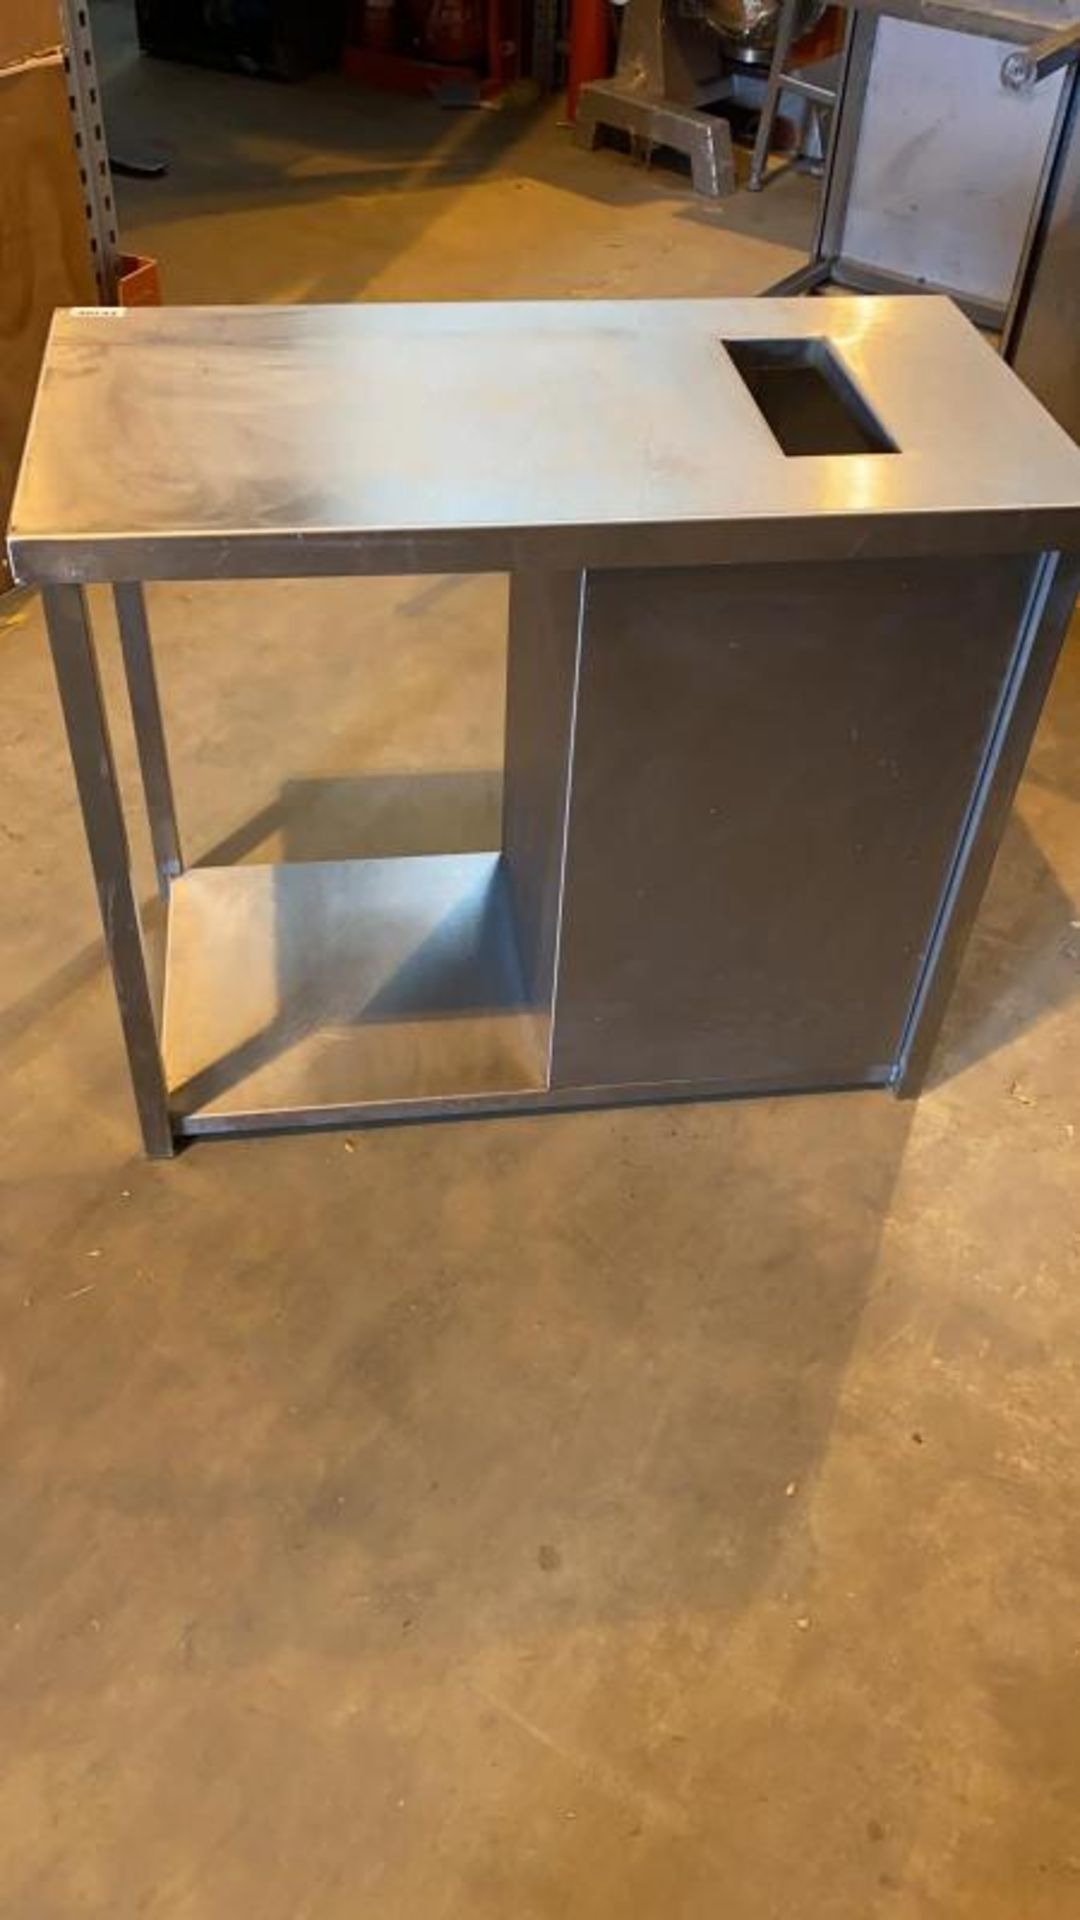 1 x Stainless Steel Commercial Kitchen Prep Unit With Waste Hole - Dimensions: 90L x 46D x 74H cm - - Bild 2 aus 2